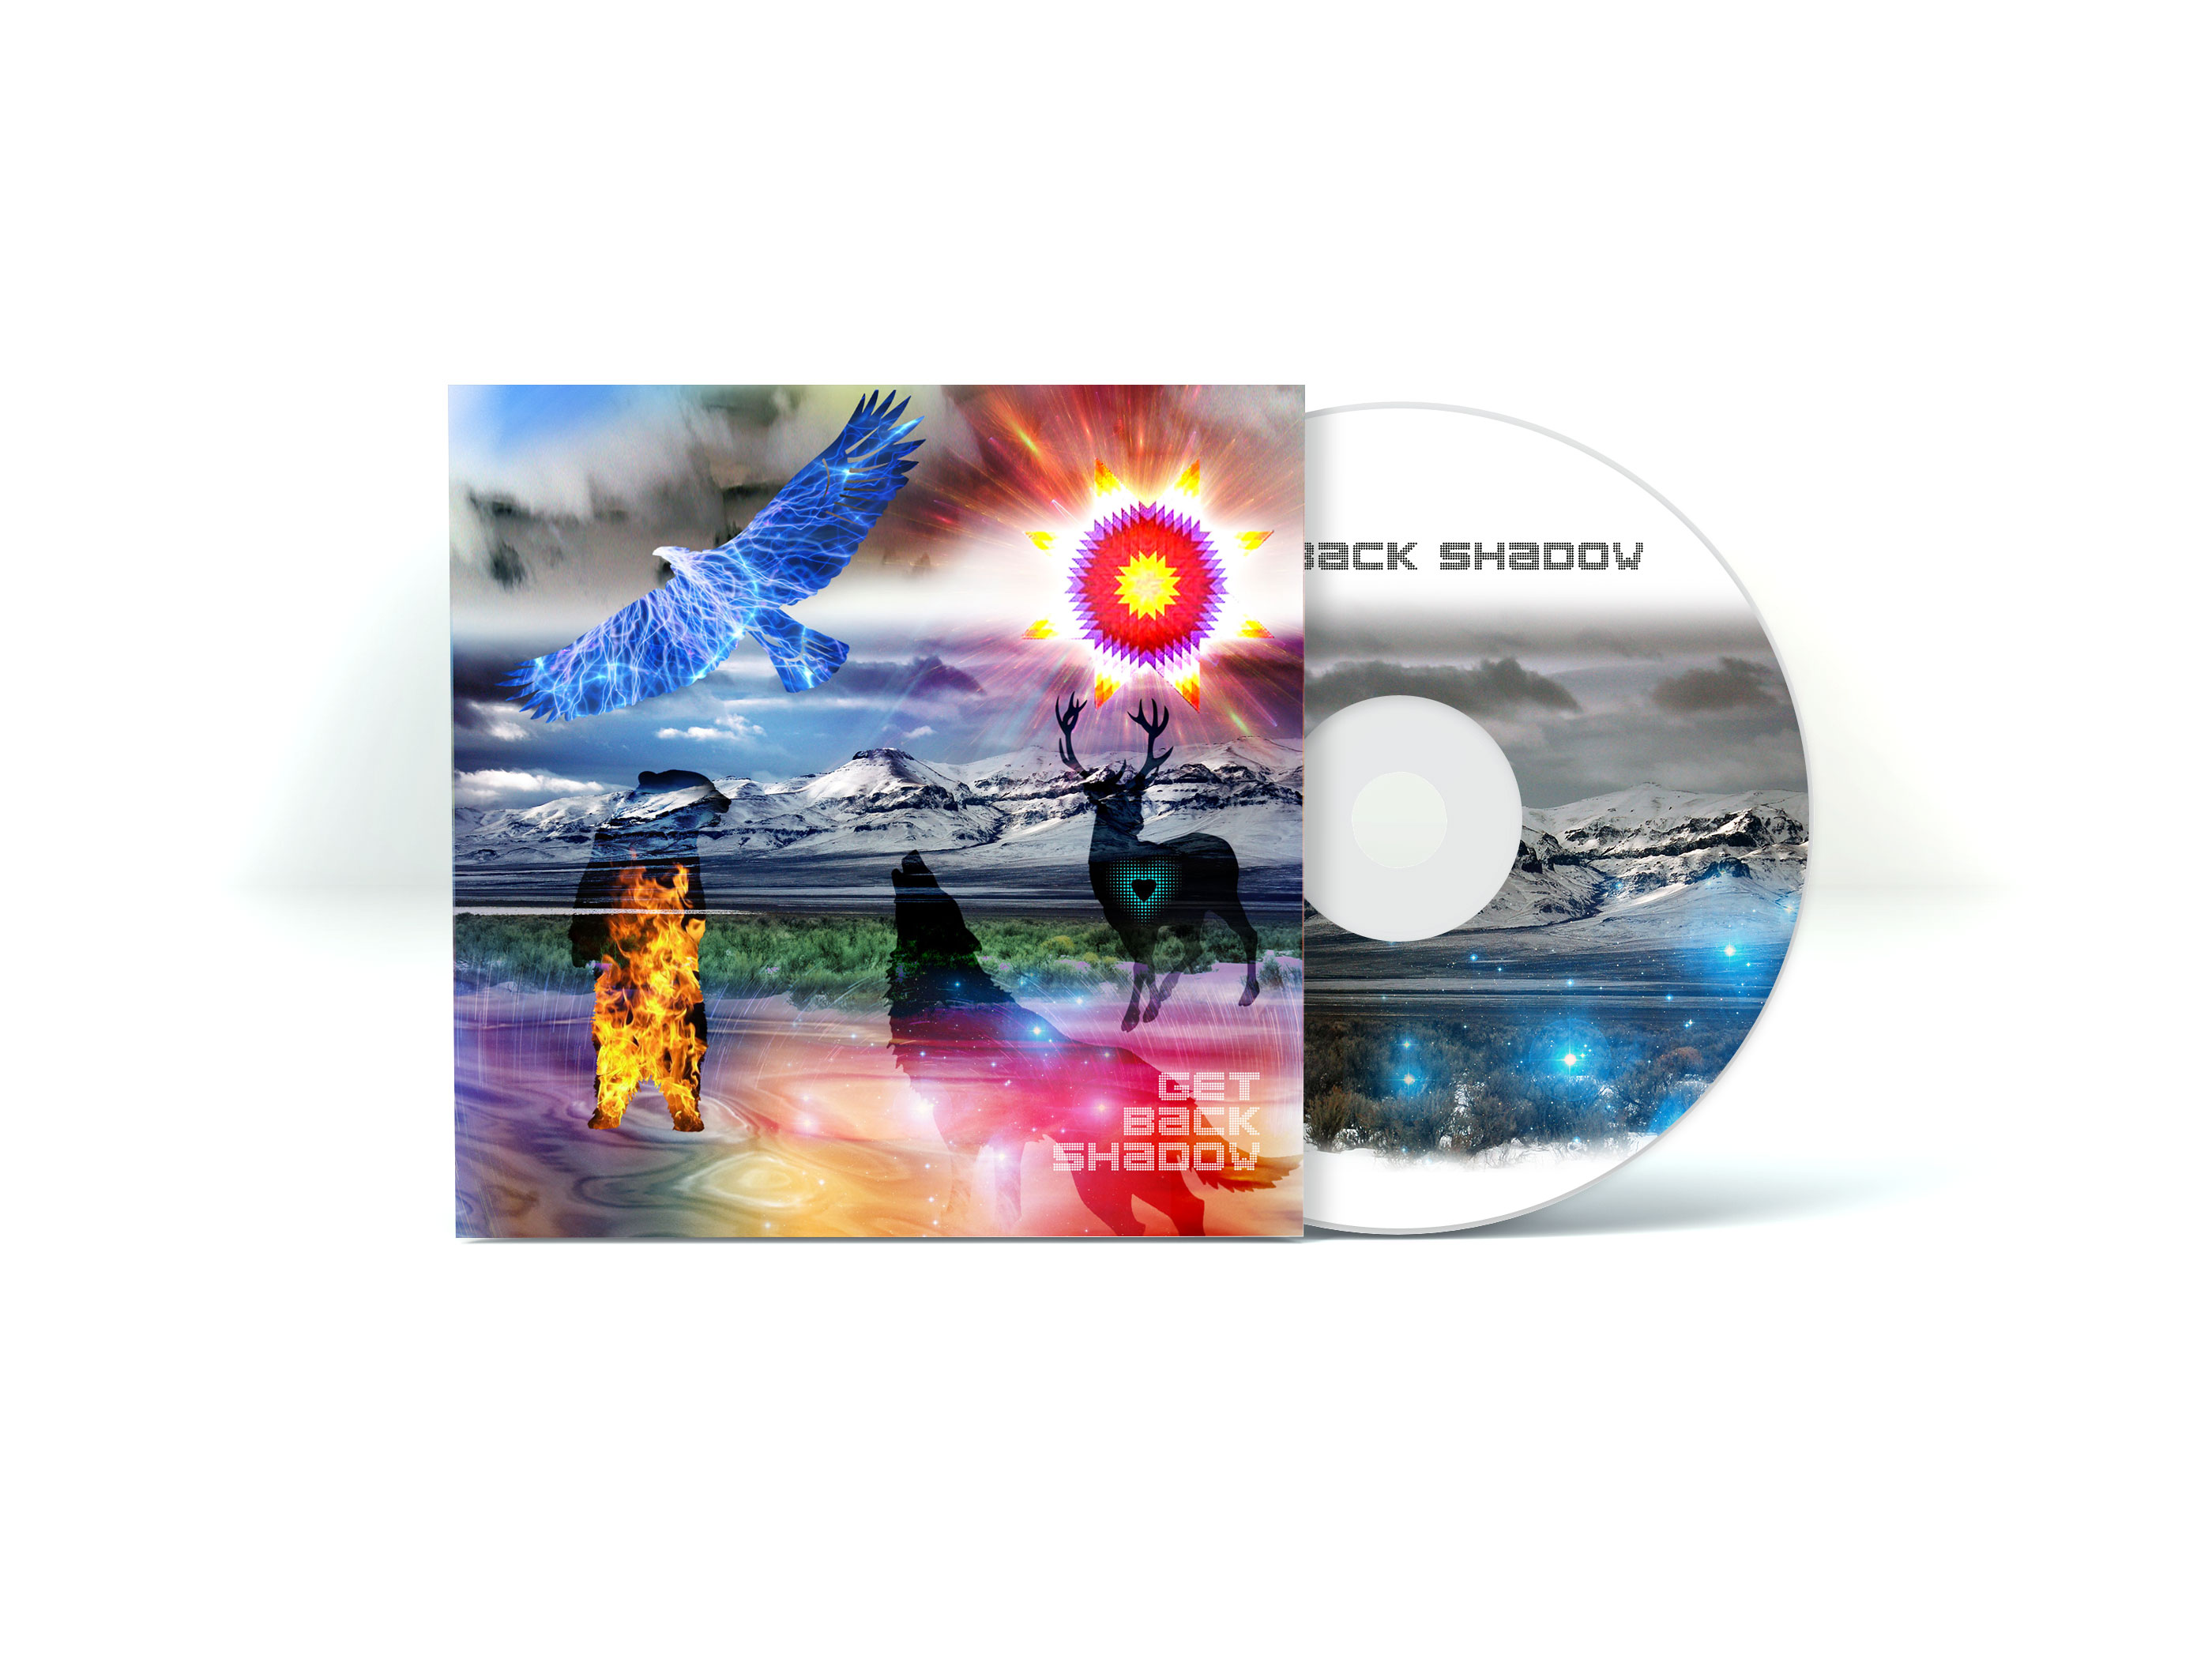 Get Back Shadow Album Artwork